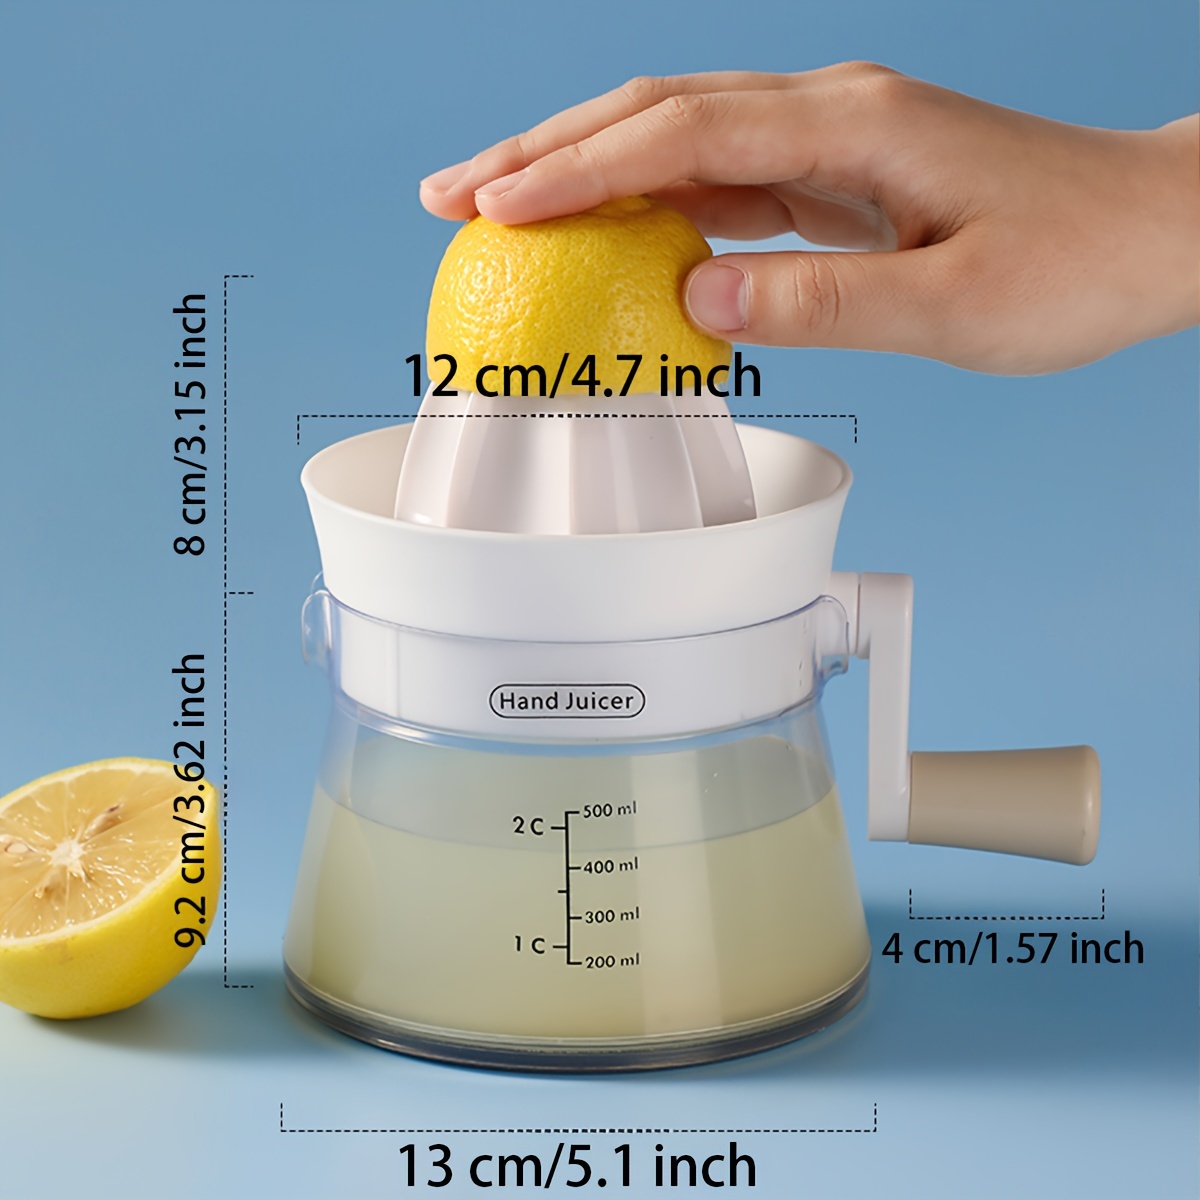 Exprimidor manual limón y naranja Limetta Rojo — Santucci